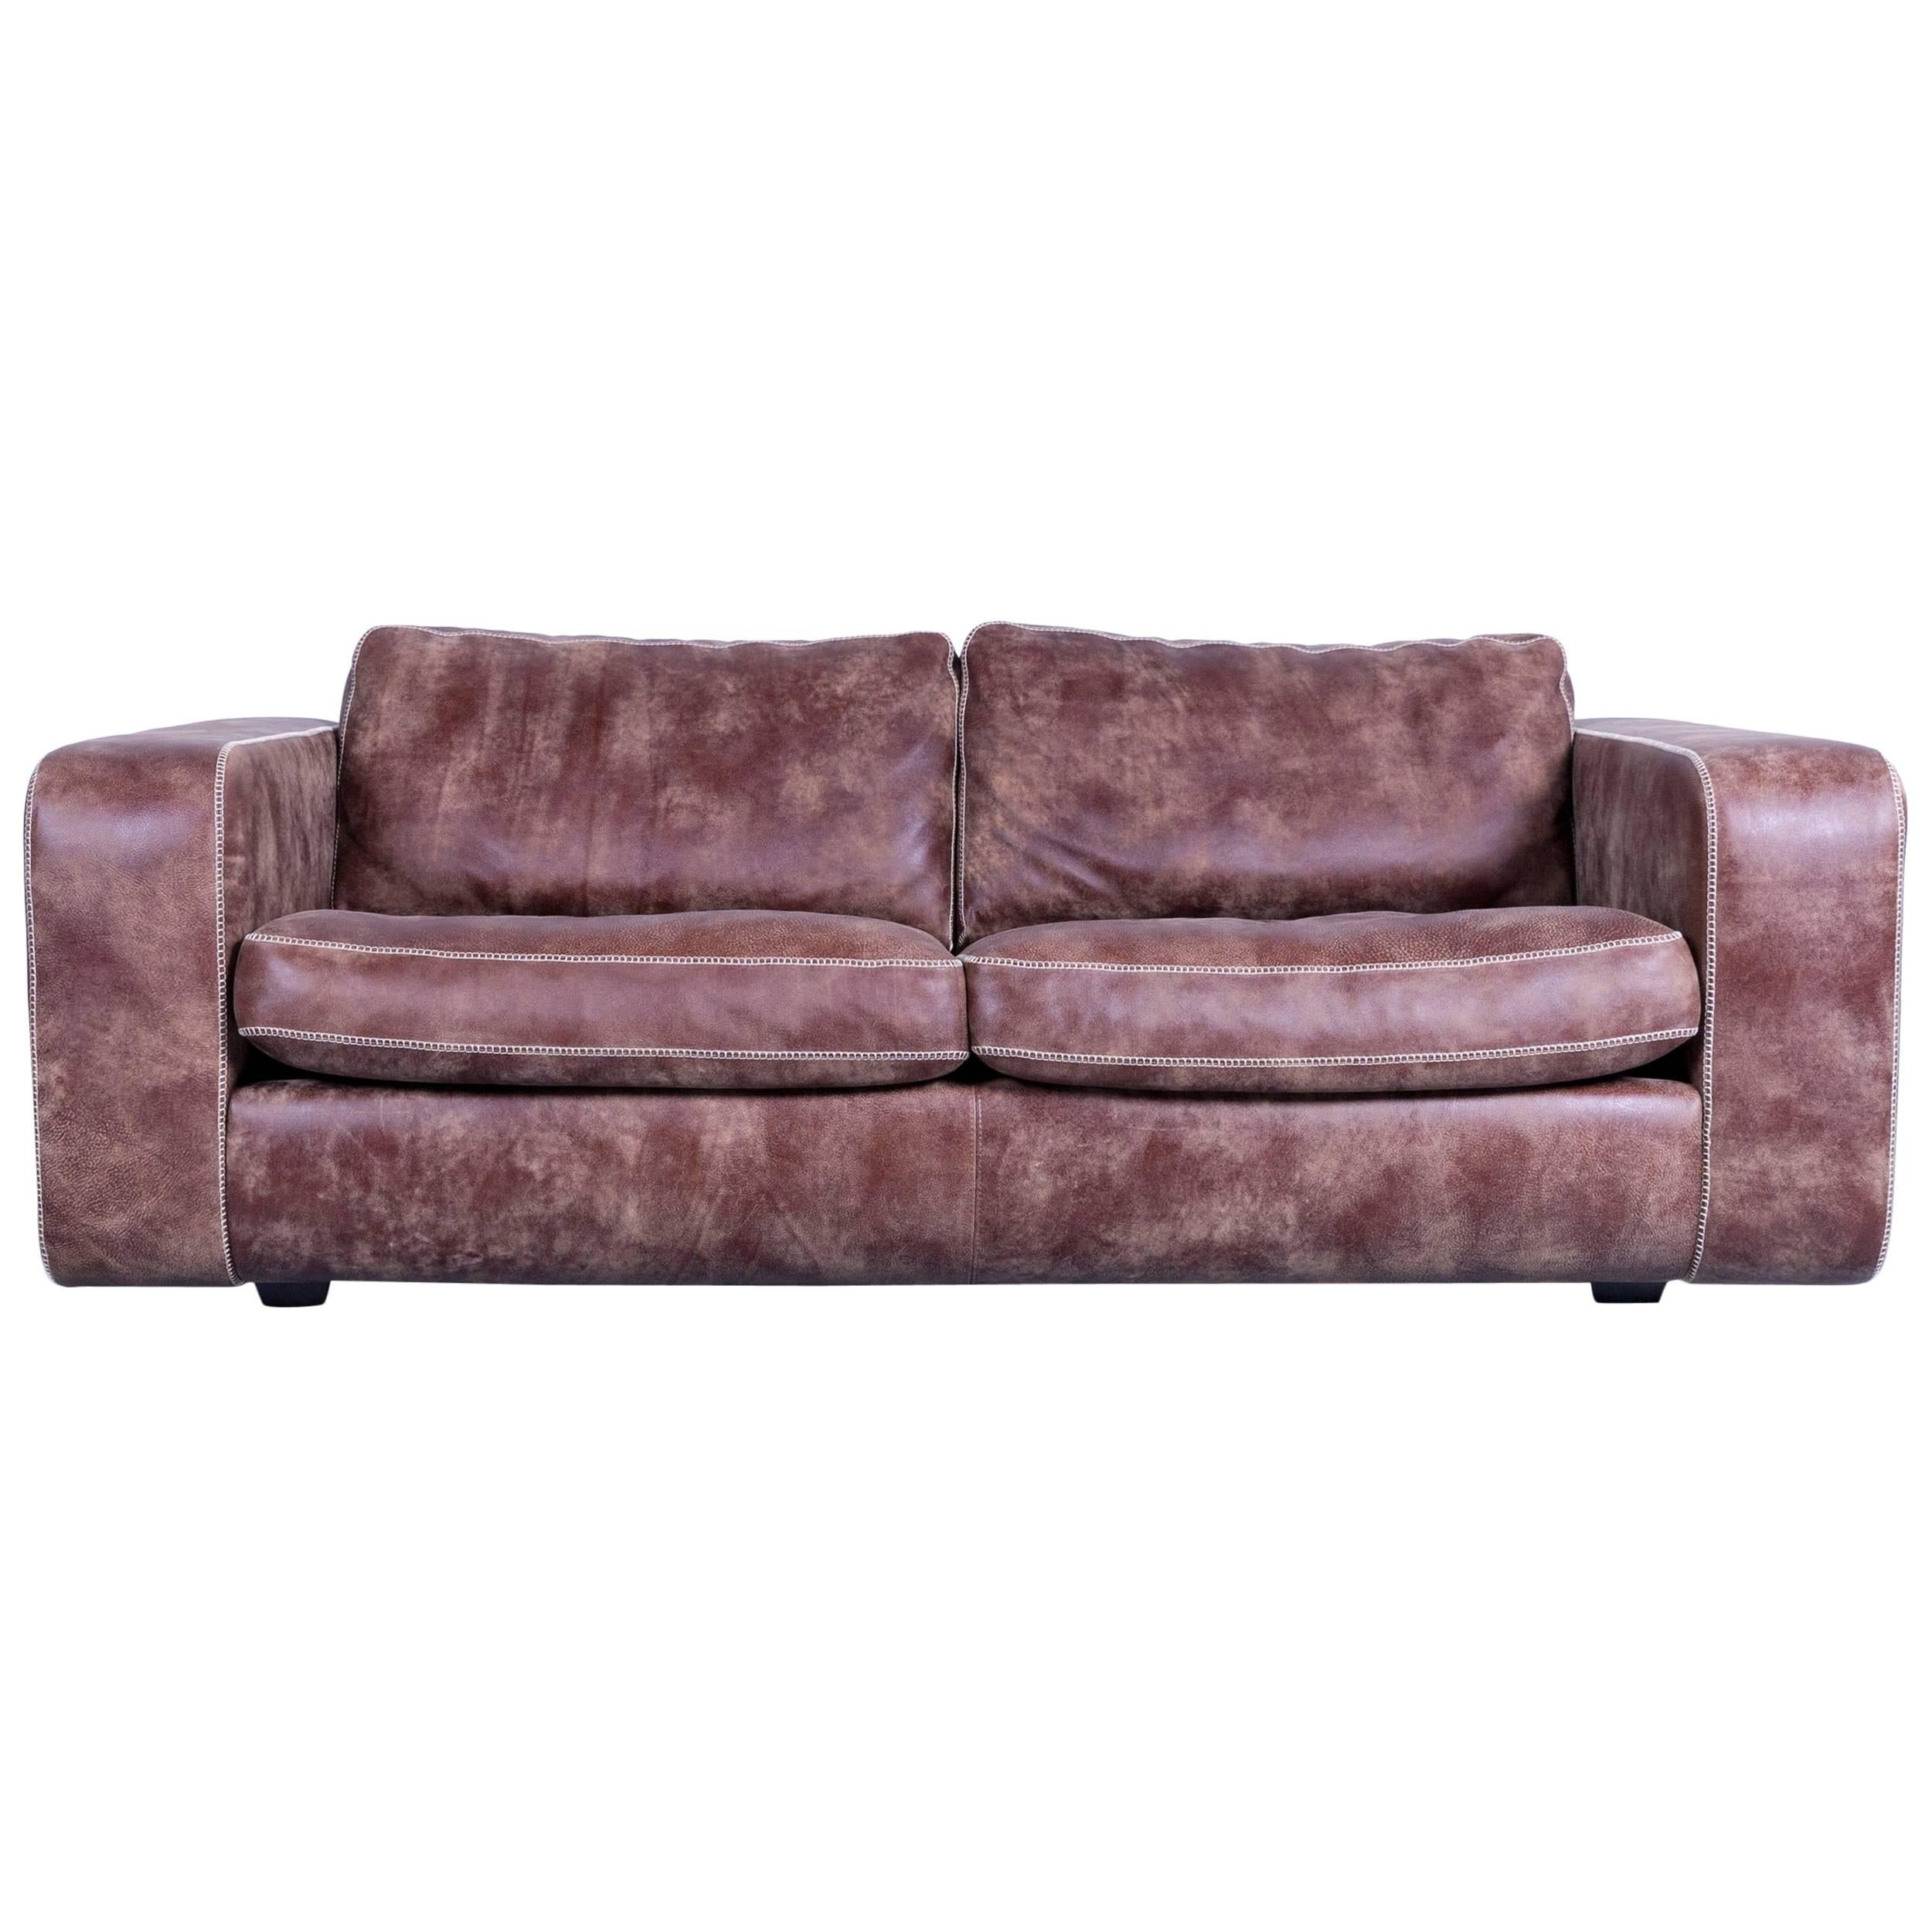 Machalke Valentino Brown Leather Sofa Three-Seat Couch